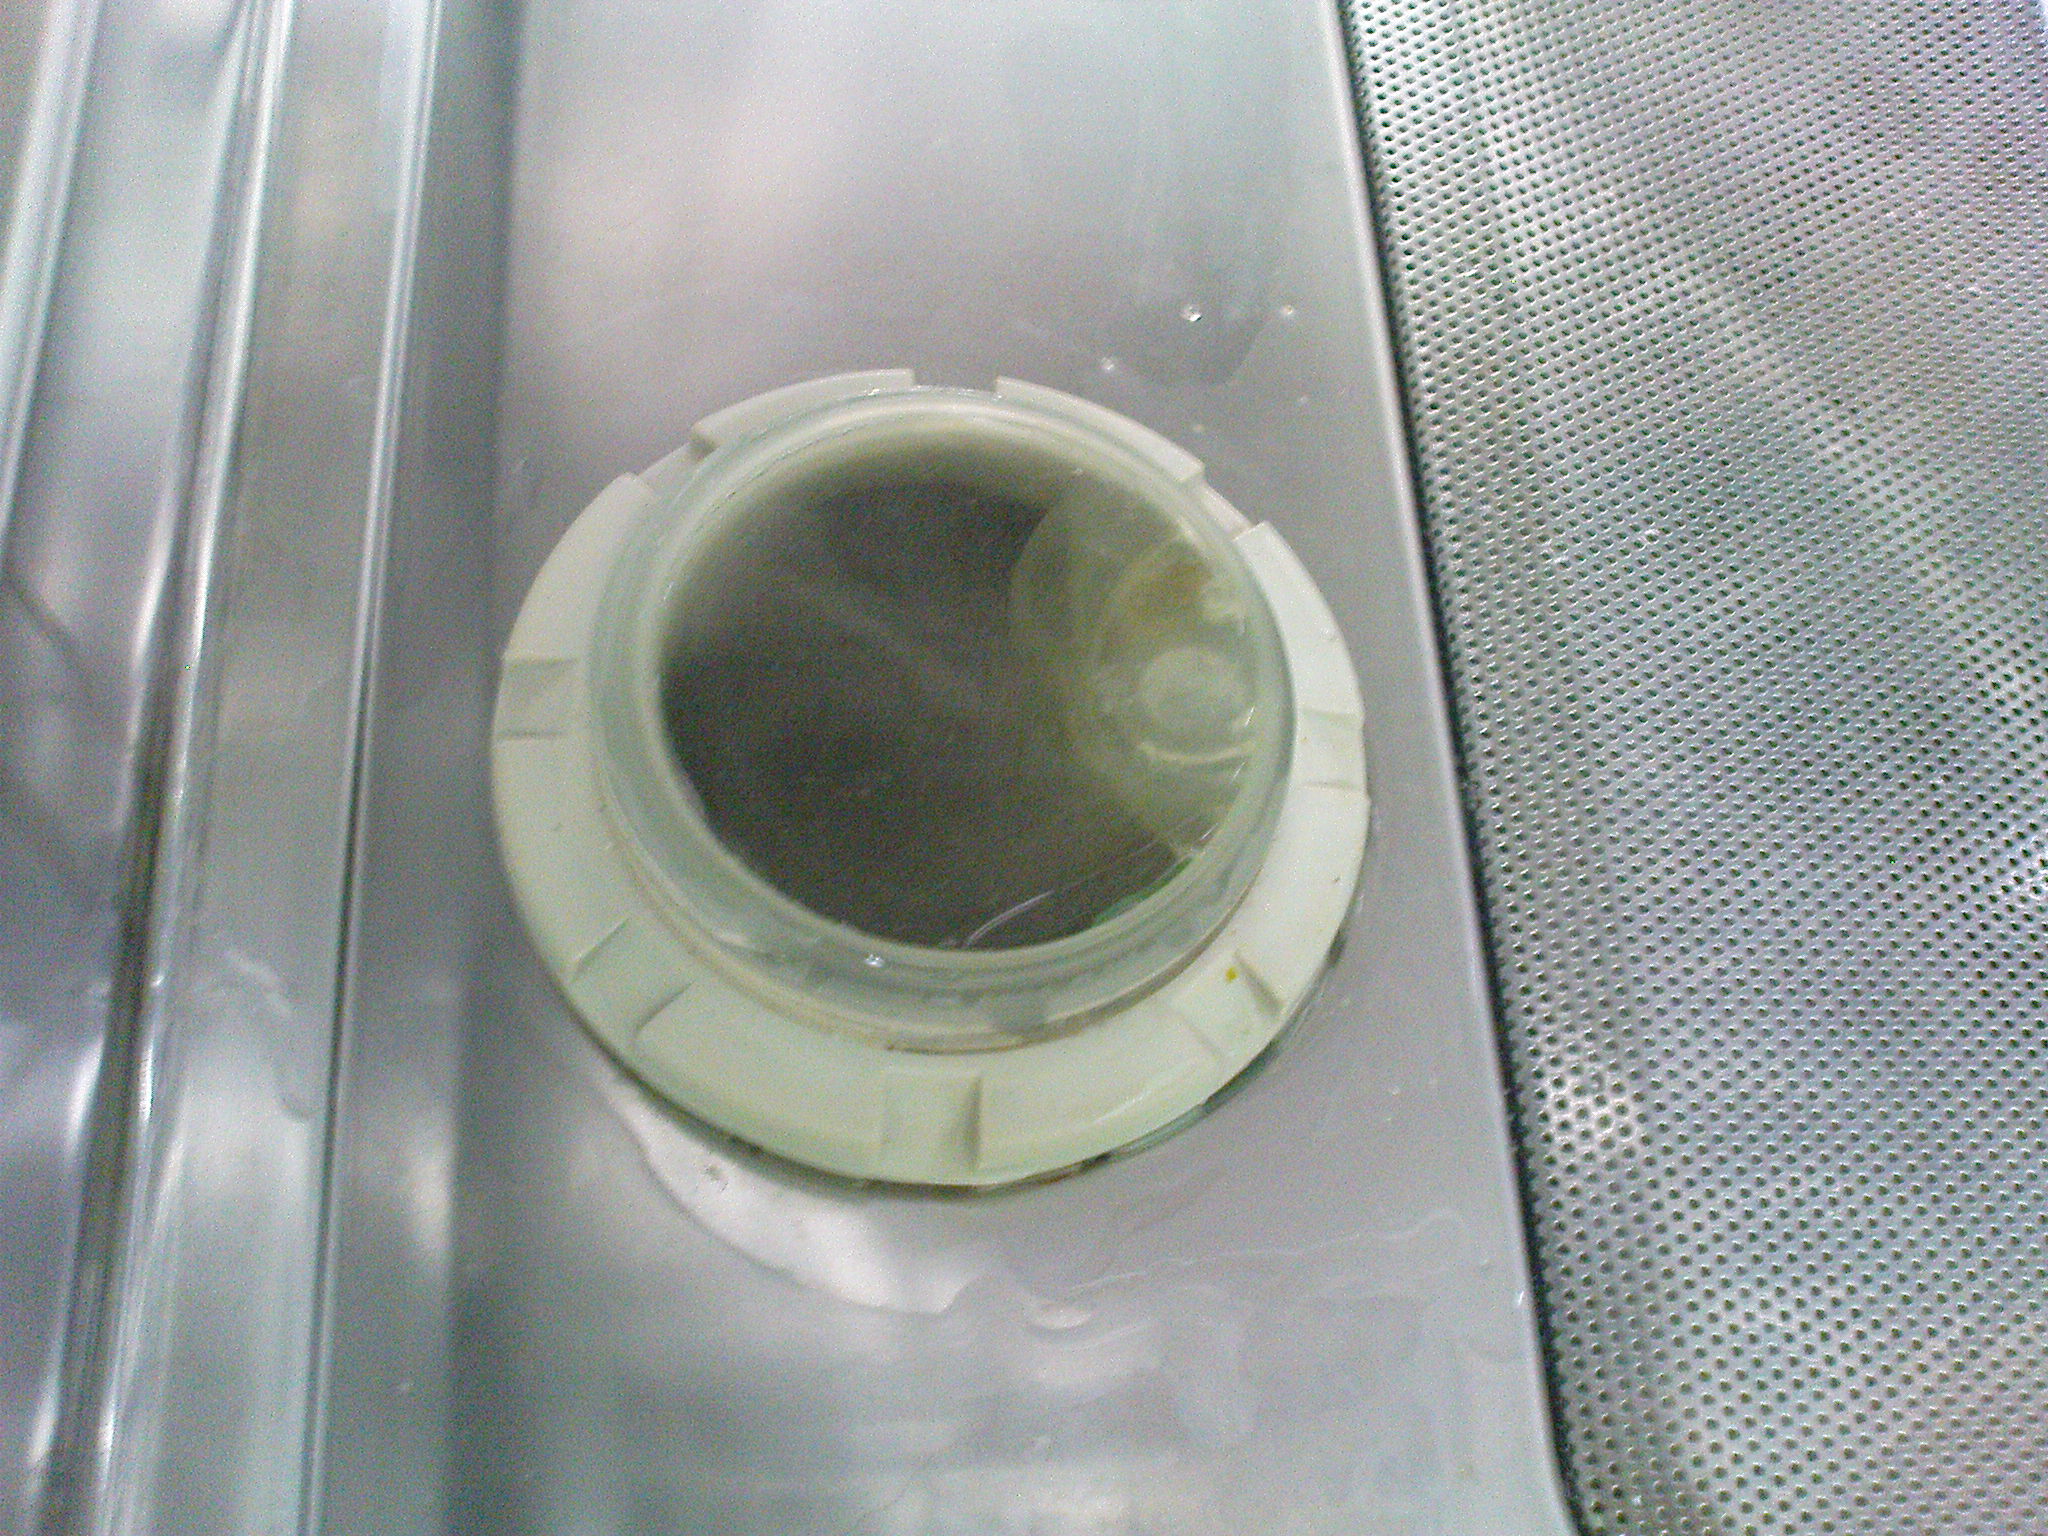 Prodis 30435 Vert Neon Indicator Project systèmes Lave-vaisselle glasswasher 6 mm